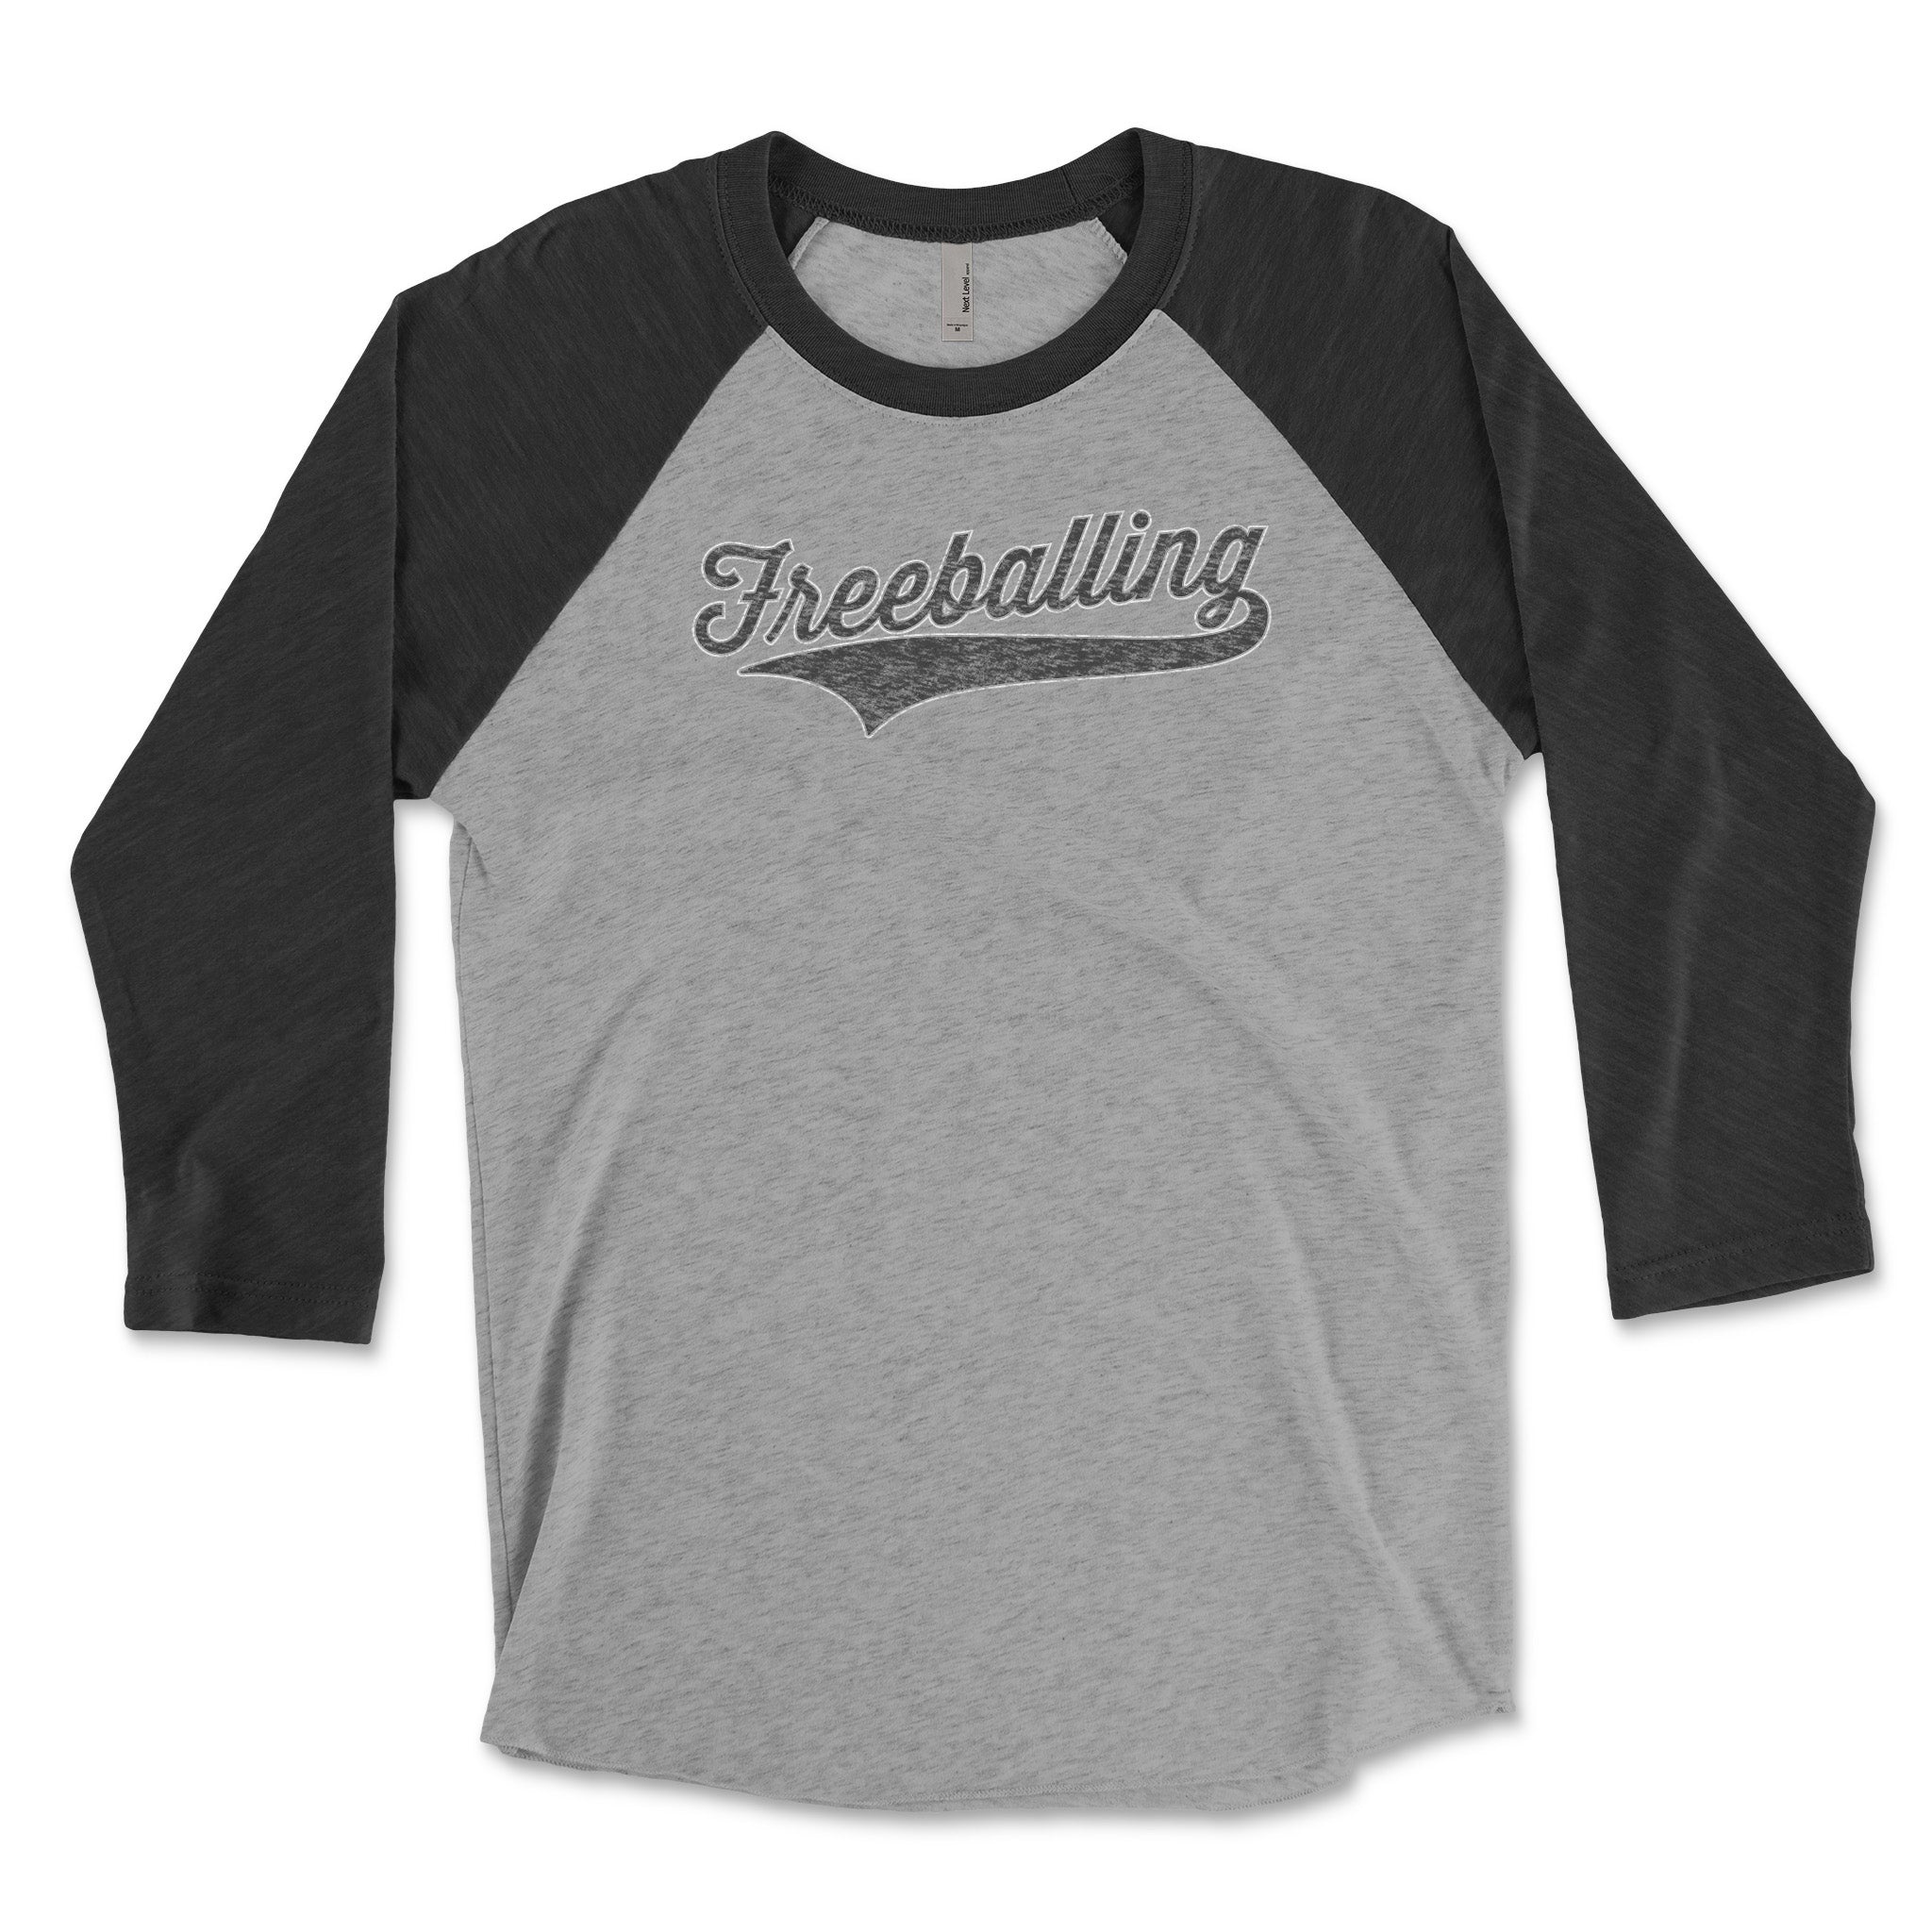 "Freeballing" 3/4 Raglan Shirt - Vintage-Inspired Bold Statement Tee - Hunky Tops